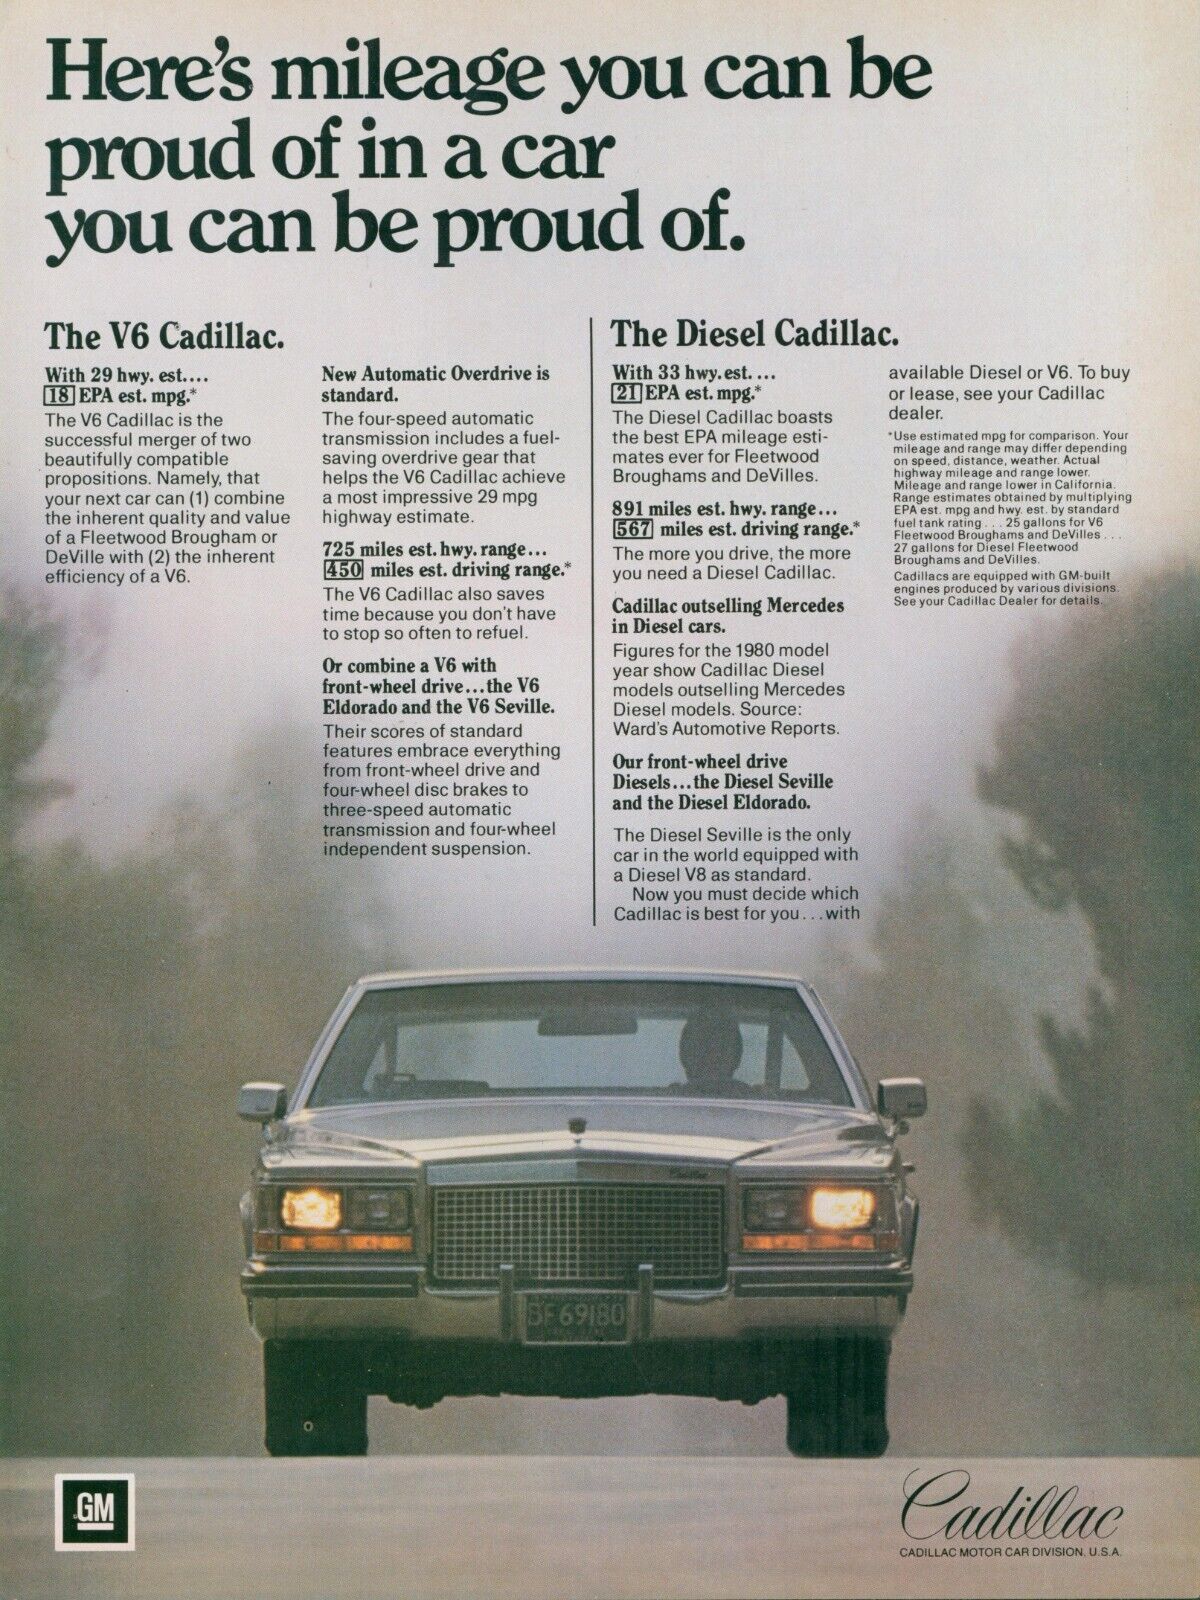 1981 Cadillac V6 Diesel Choice Mileage Proud Road Scene Vintage Print Ad SI9